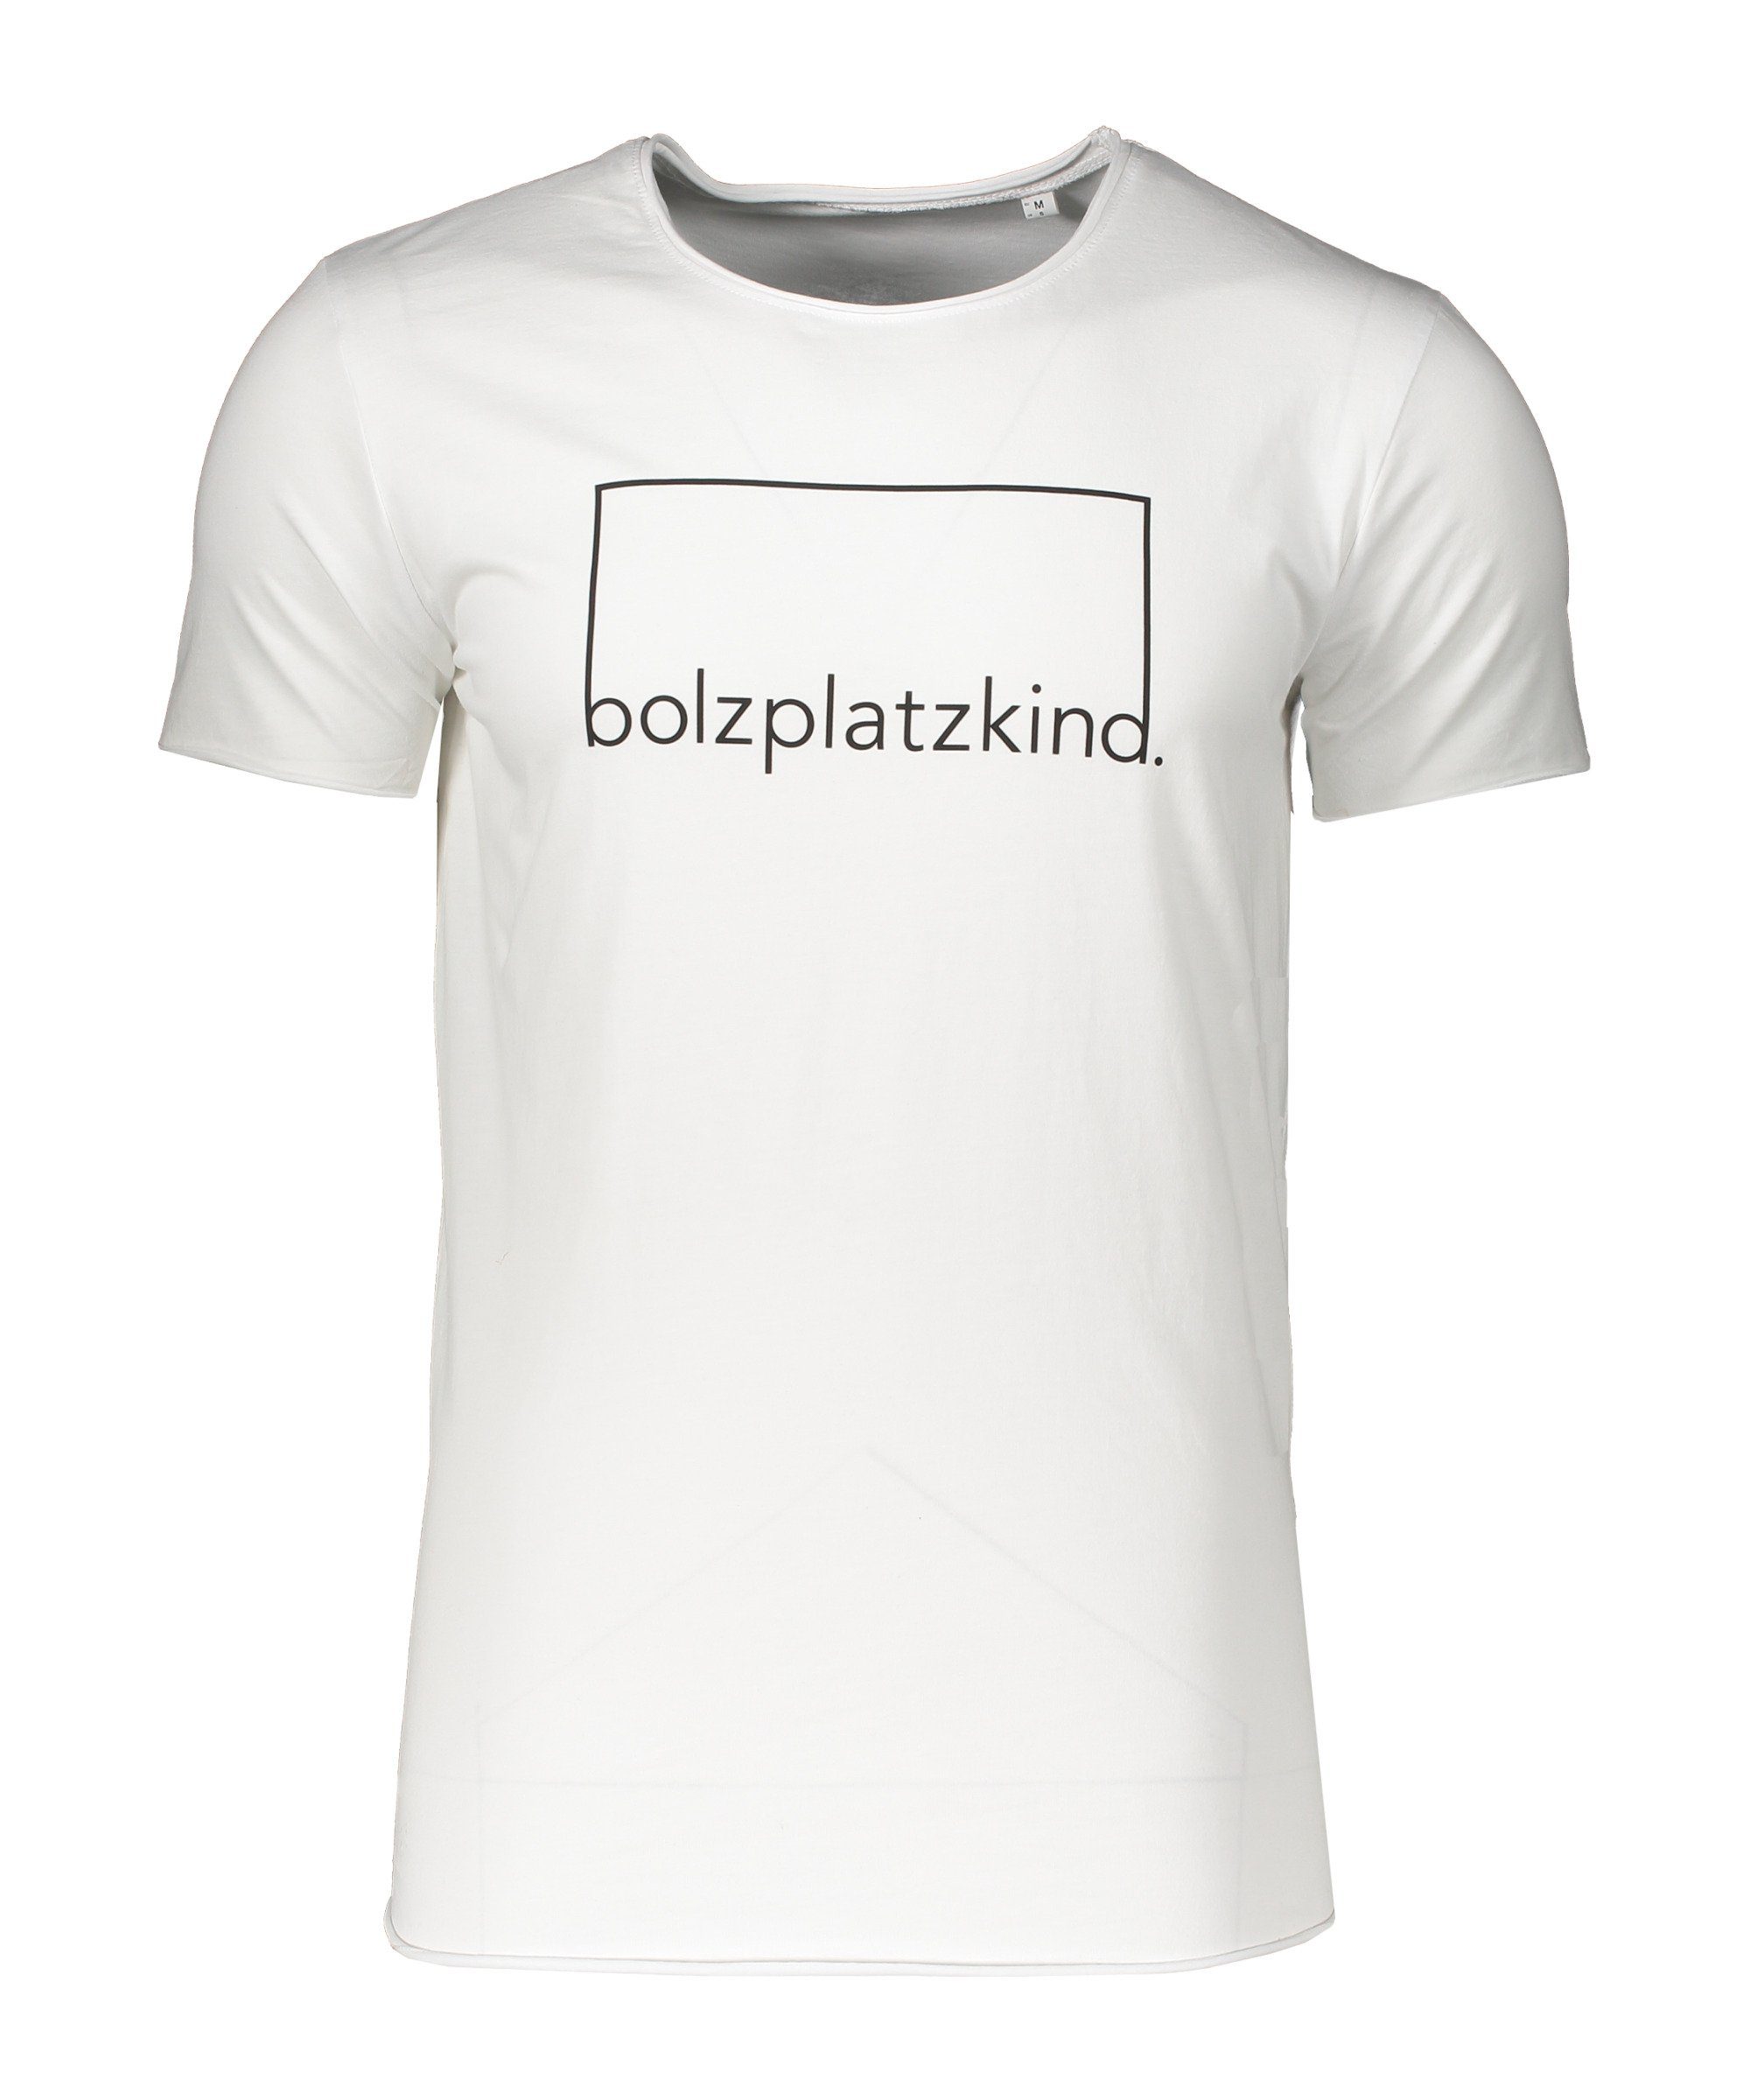 Sweatshirt Longshirt weiss Bolzplatzkind "Langholz"